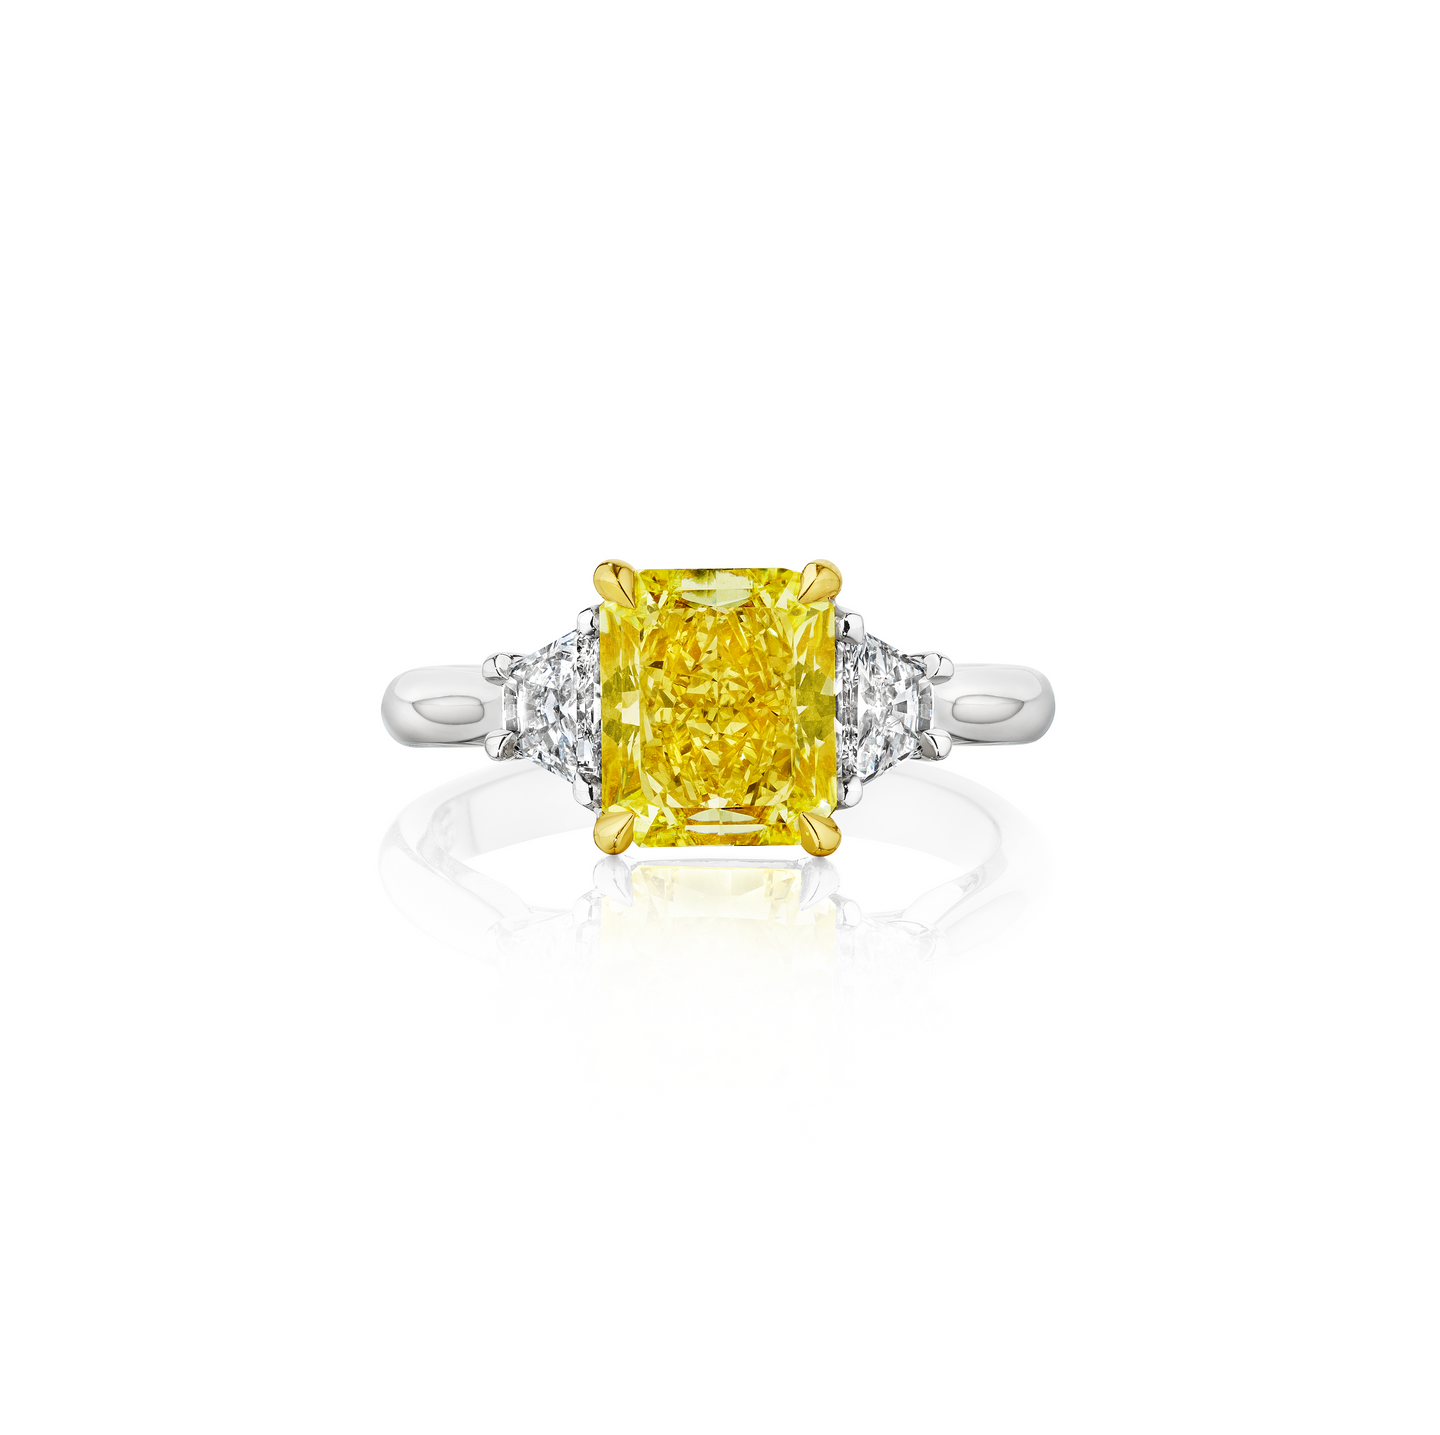 Fink's Exclusive Platinum Radiant Cut Fancy Yellow Diamond Engagement Ring